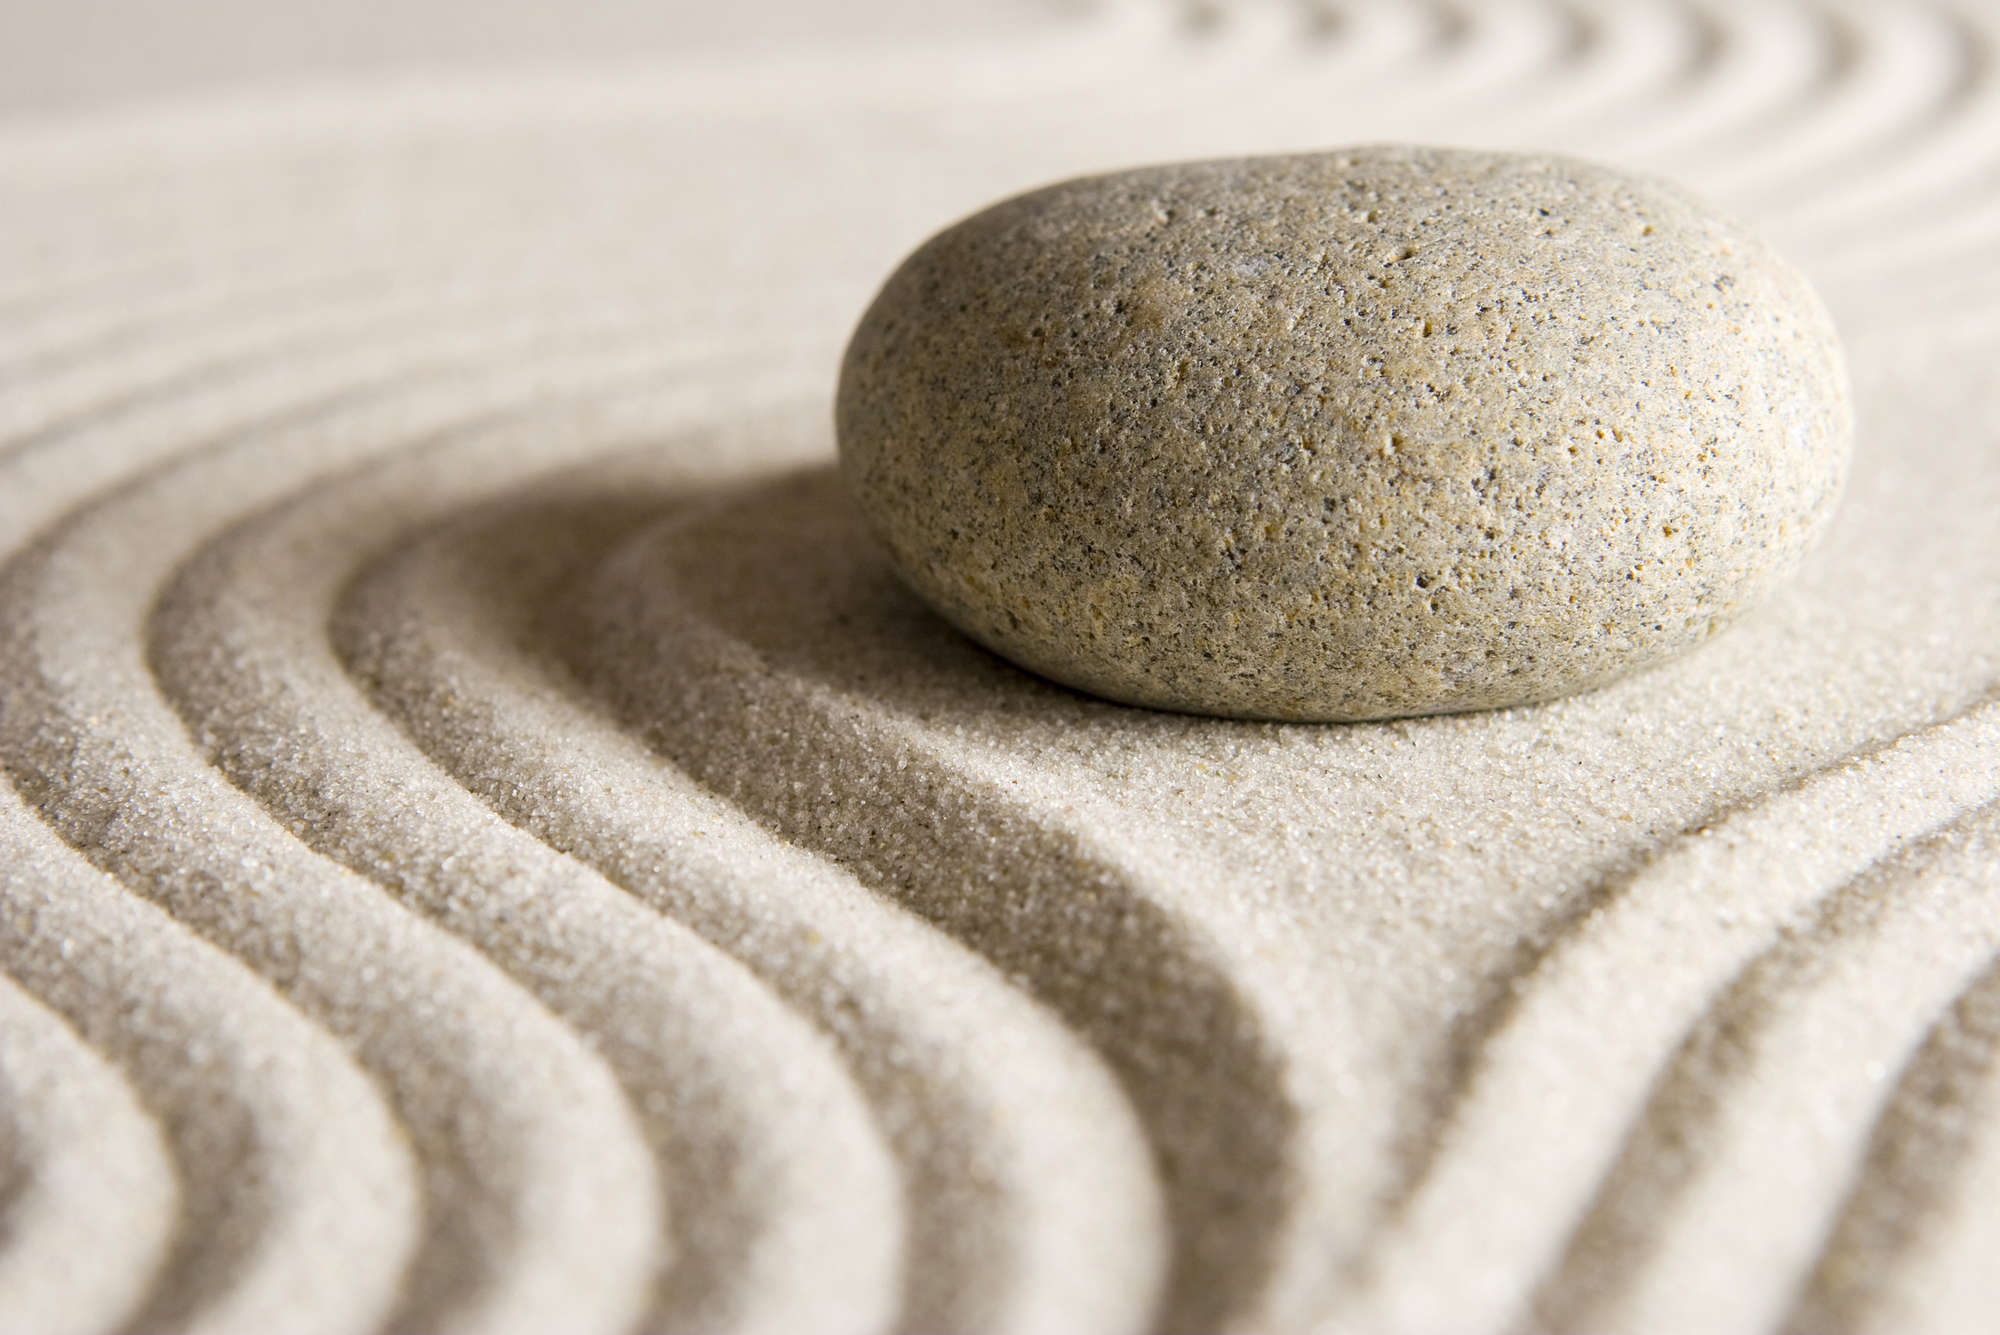             Fotomurali Pattern in the Sand with Stone - Materiali non tessuto testurizzato
        